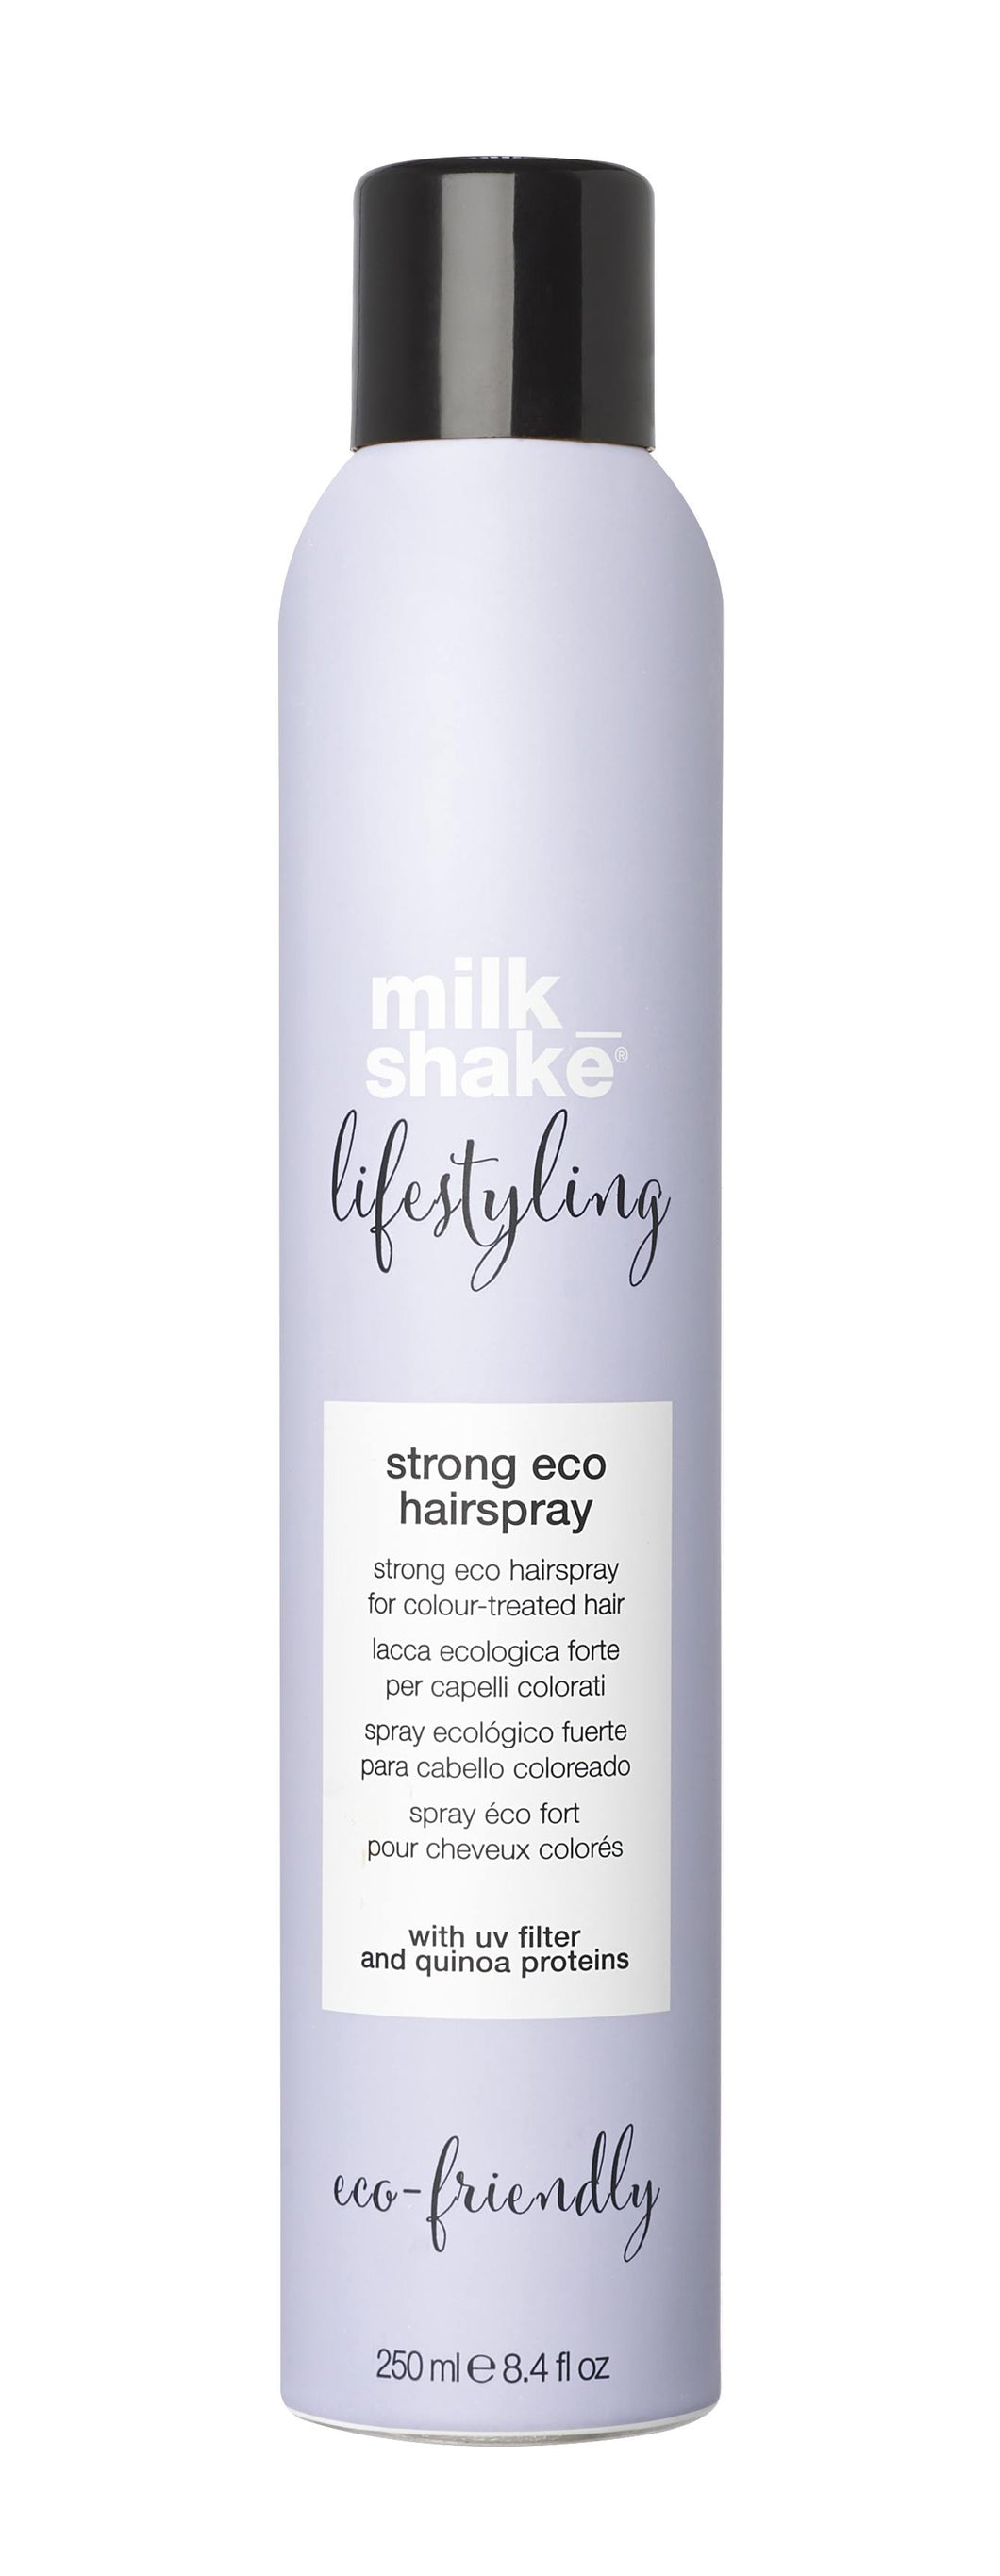 milk_shake strong eco hairspray product image